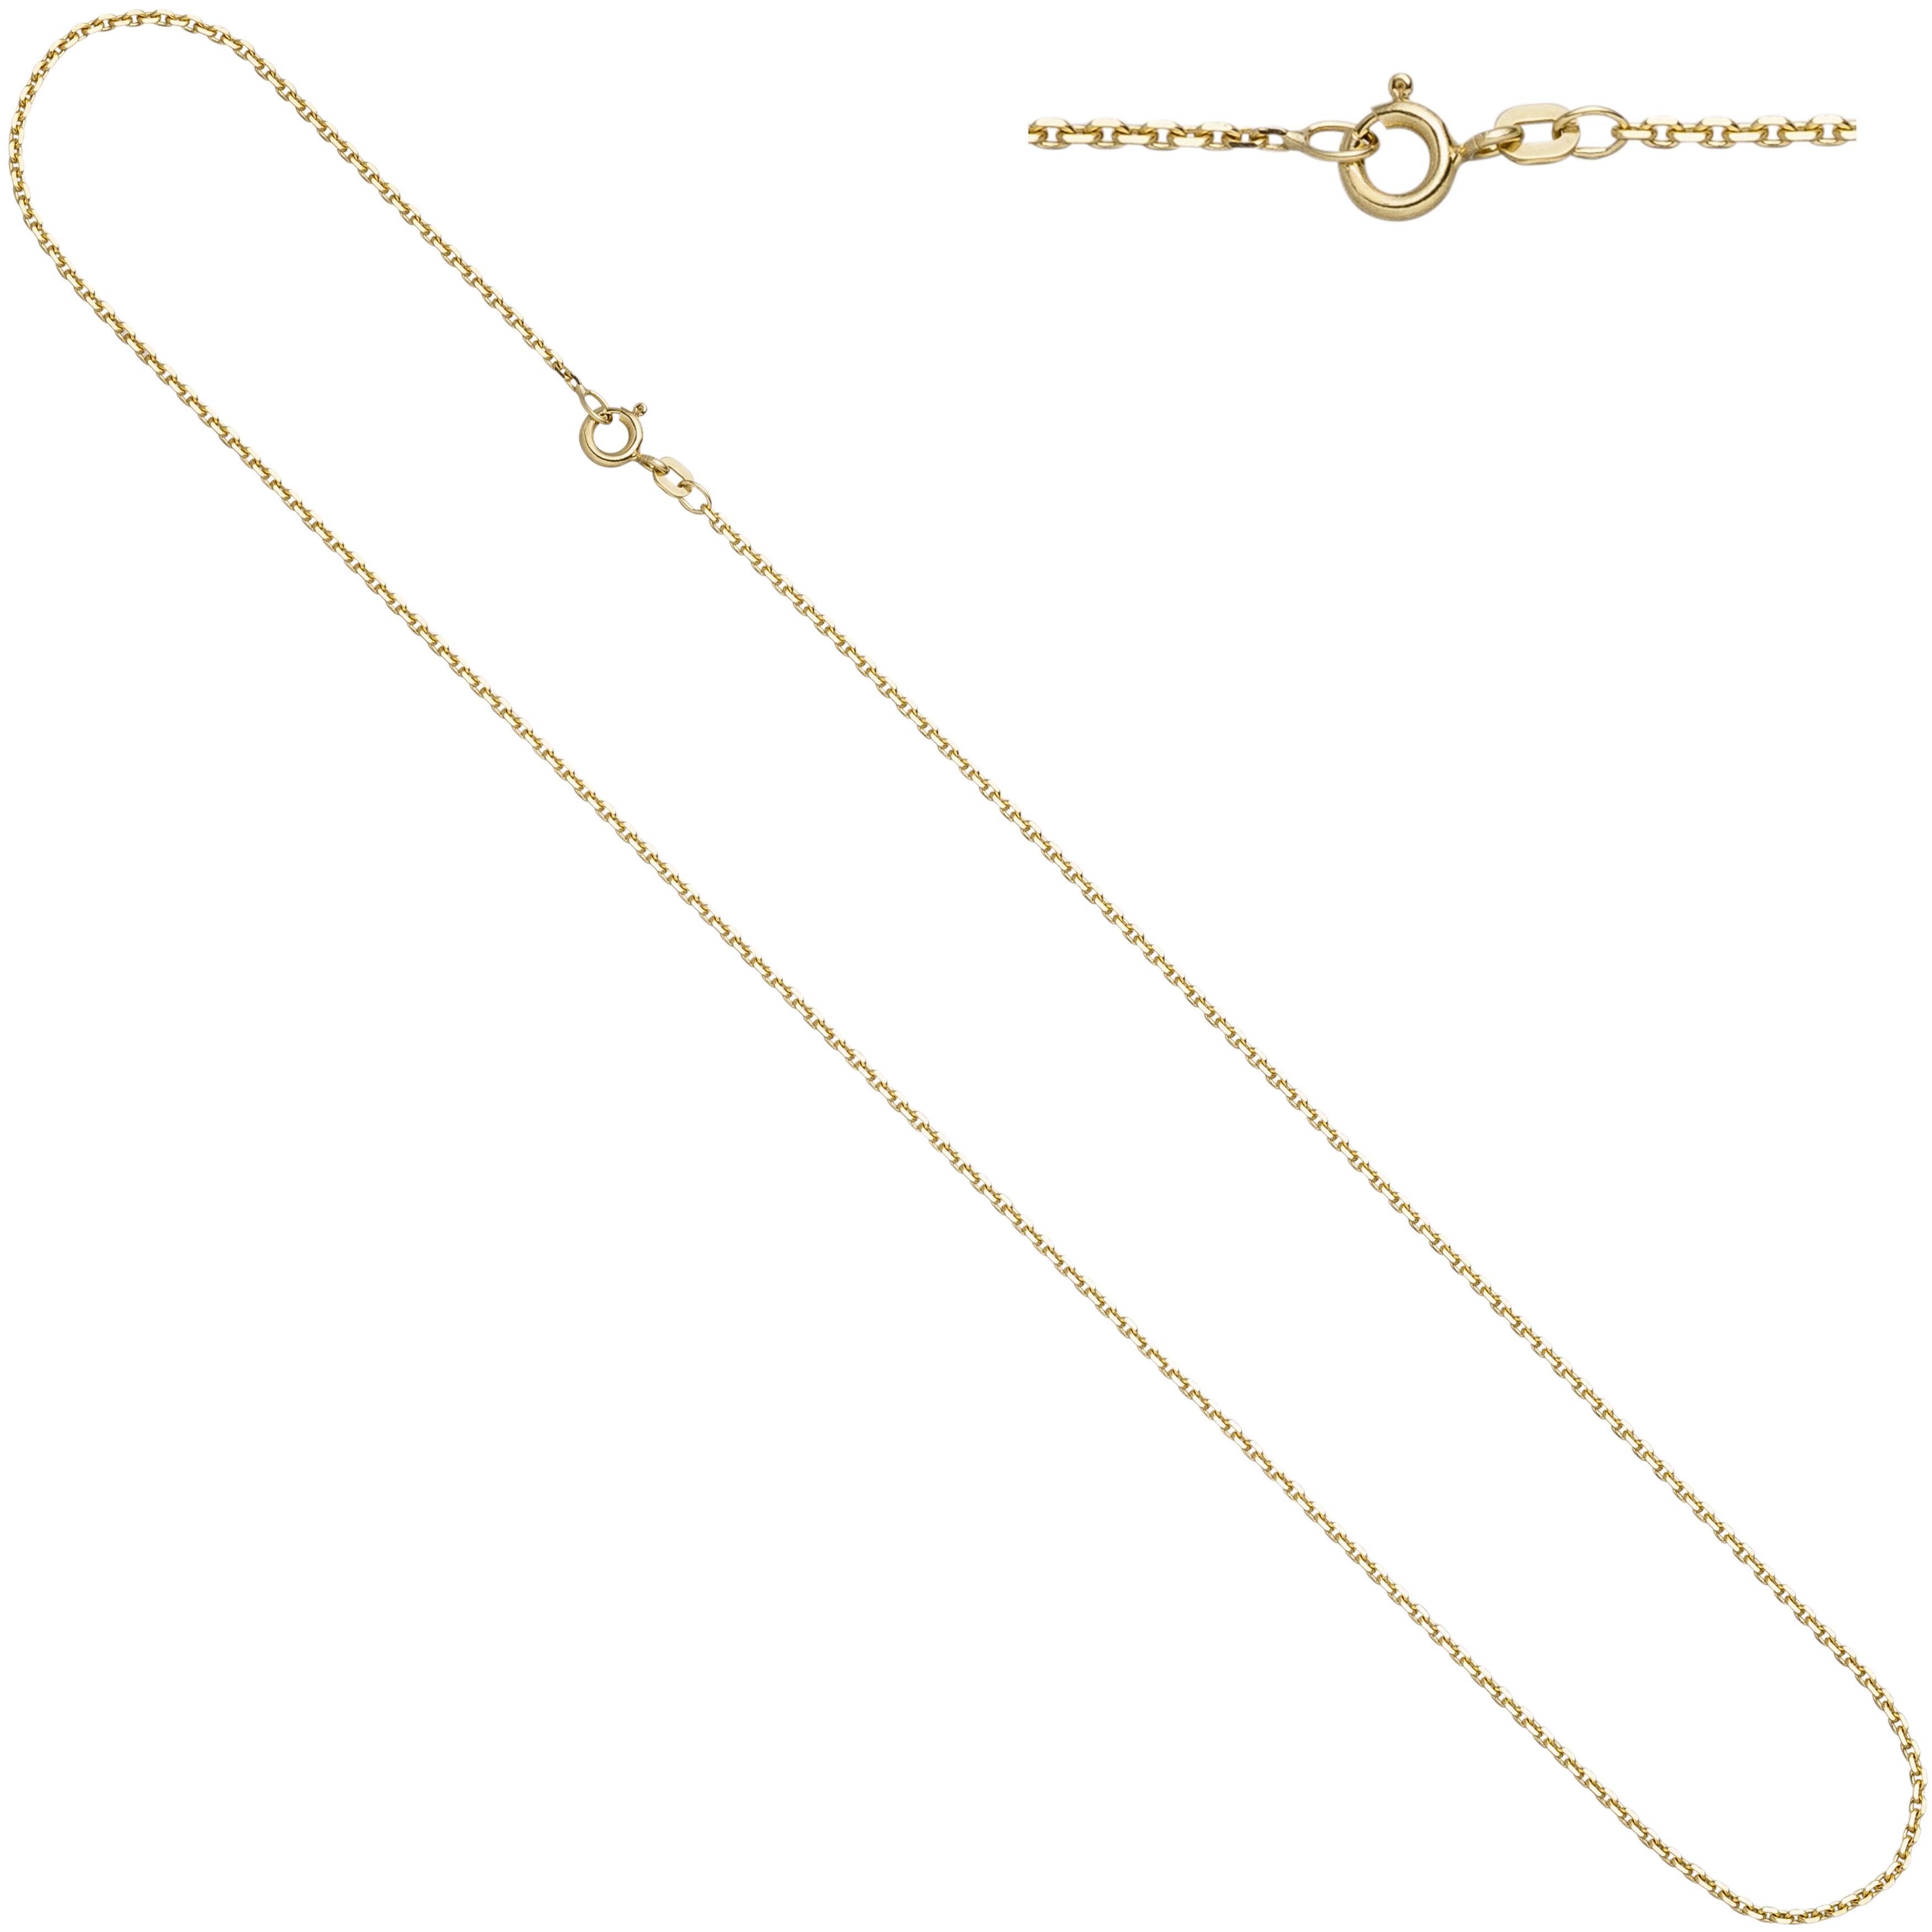 Ankerkette 585 Gelbgold 1,2 mm 38 cm Gold Kette Halskette Federring